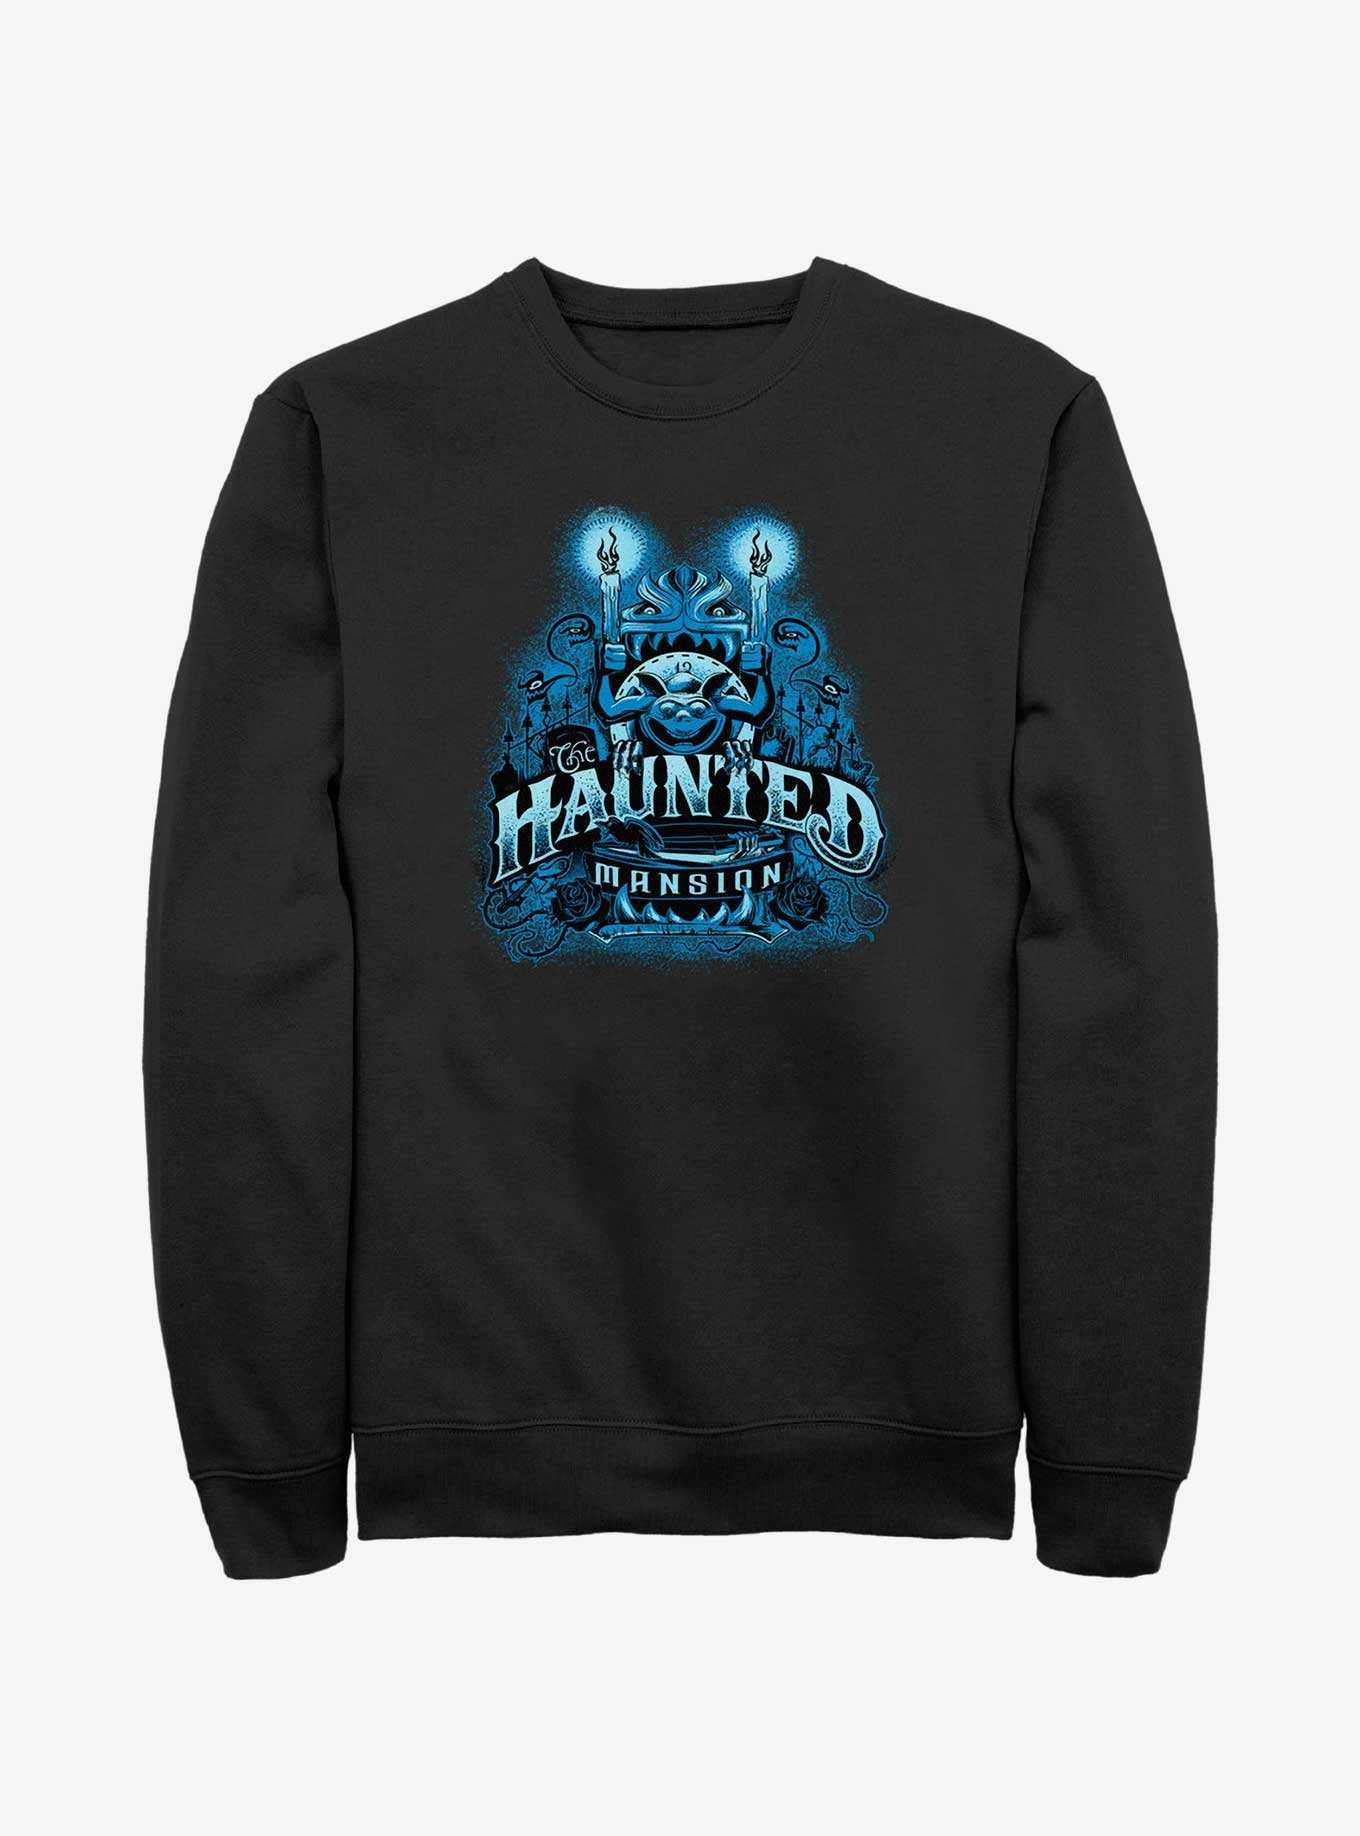 Disney Haunted Mansion Haunted Gargoyle Candles Sweatshirt, , hi-res